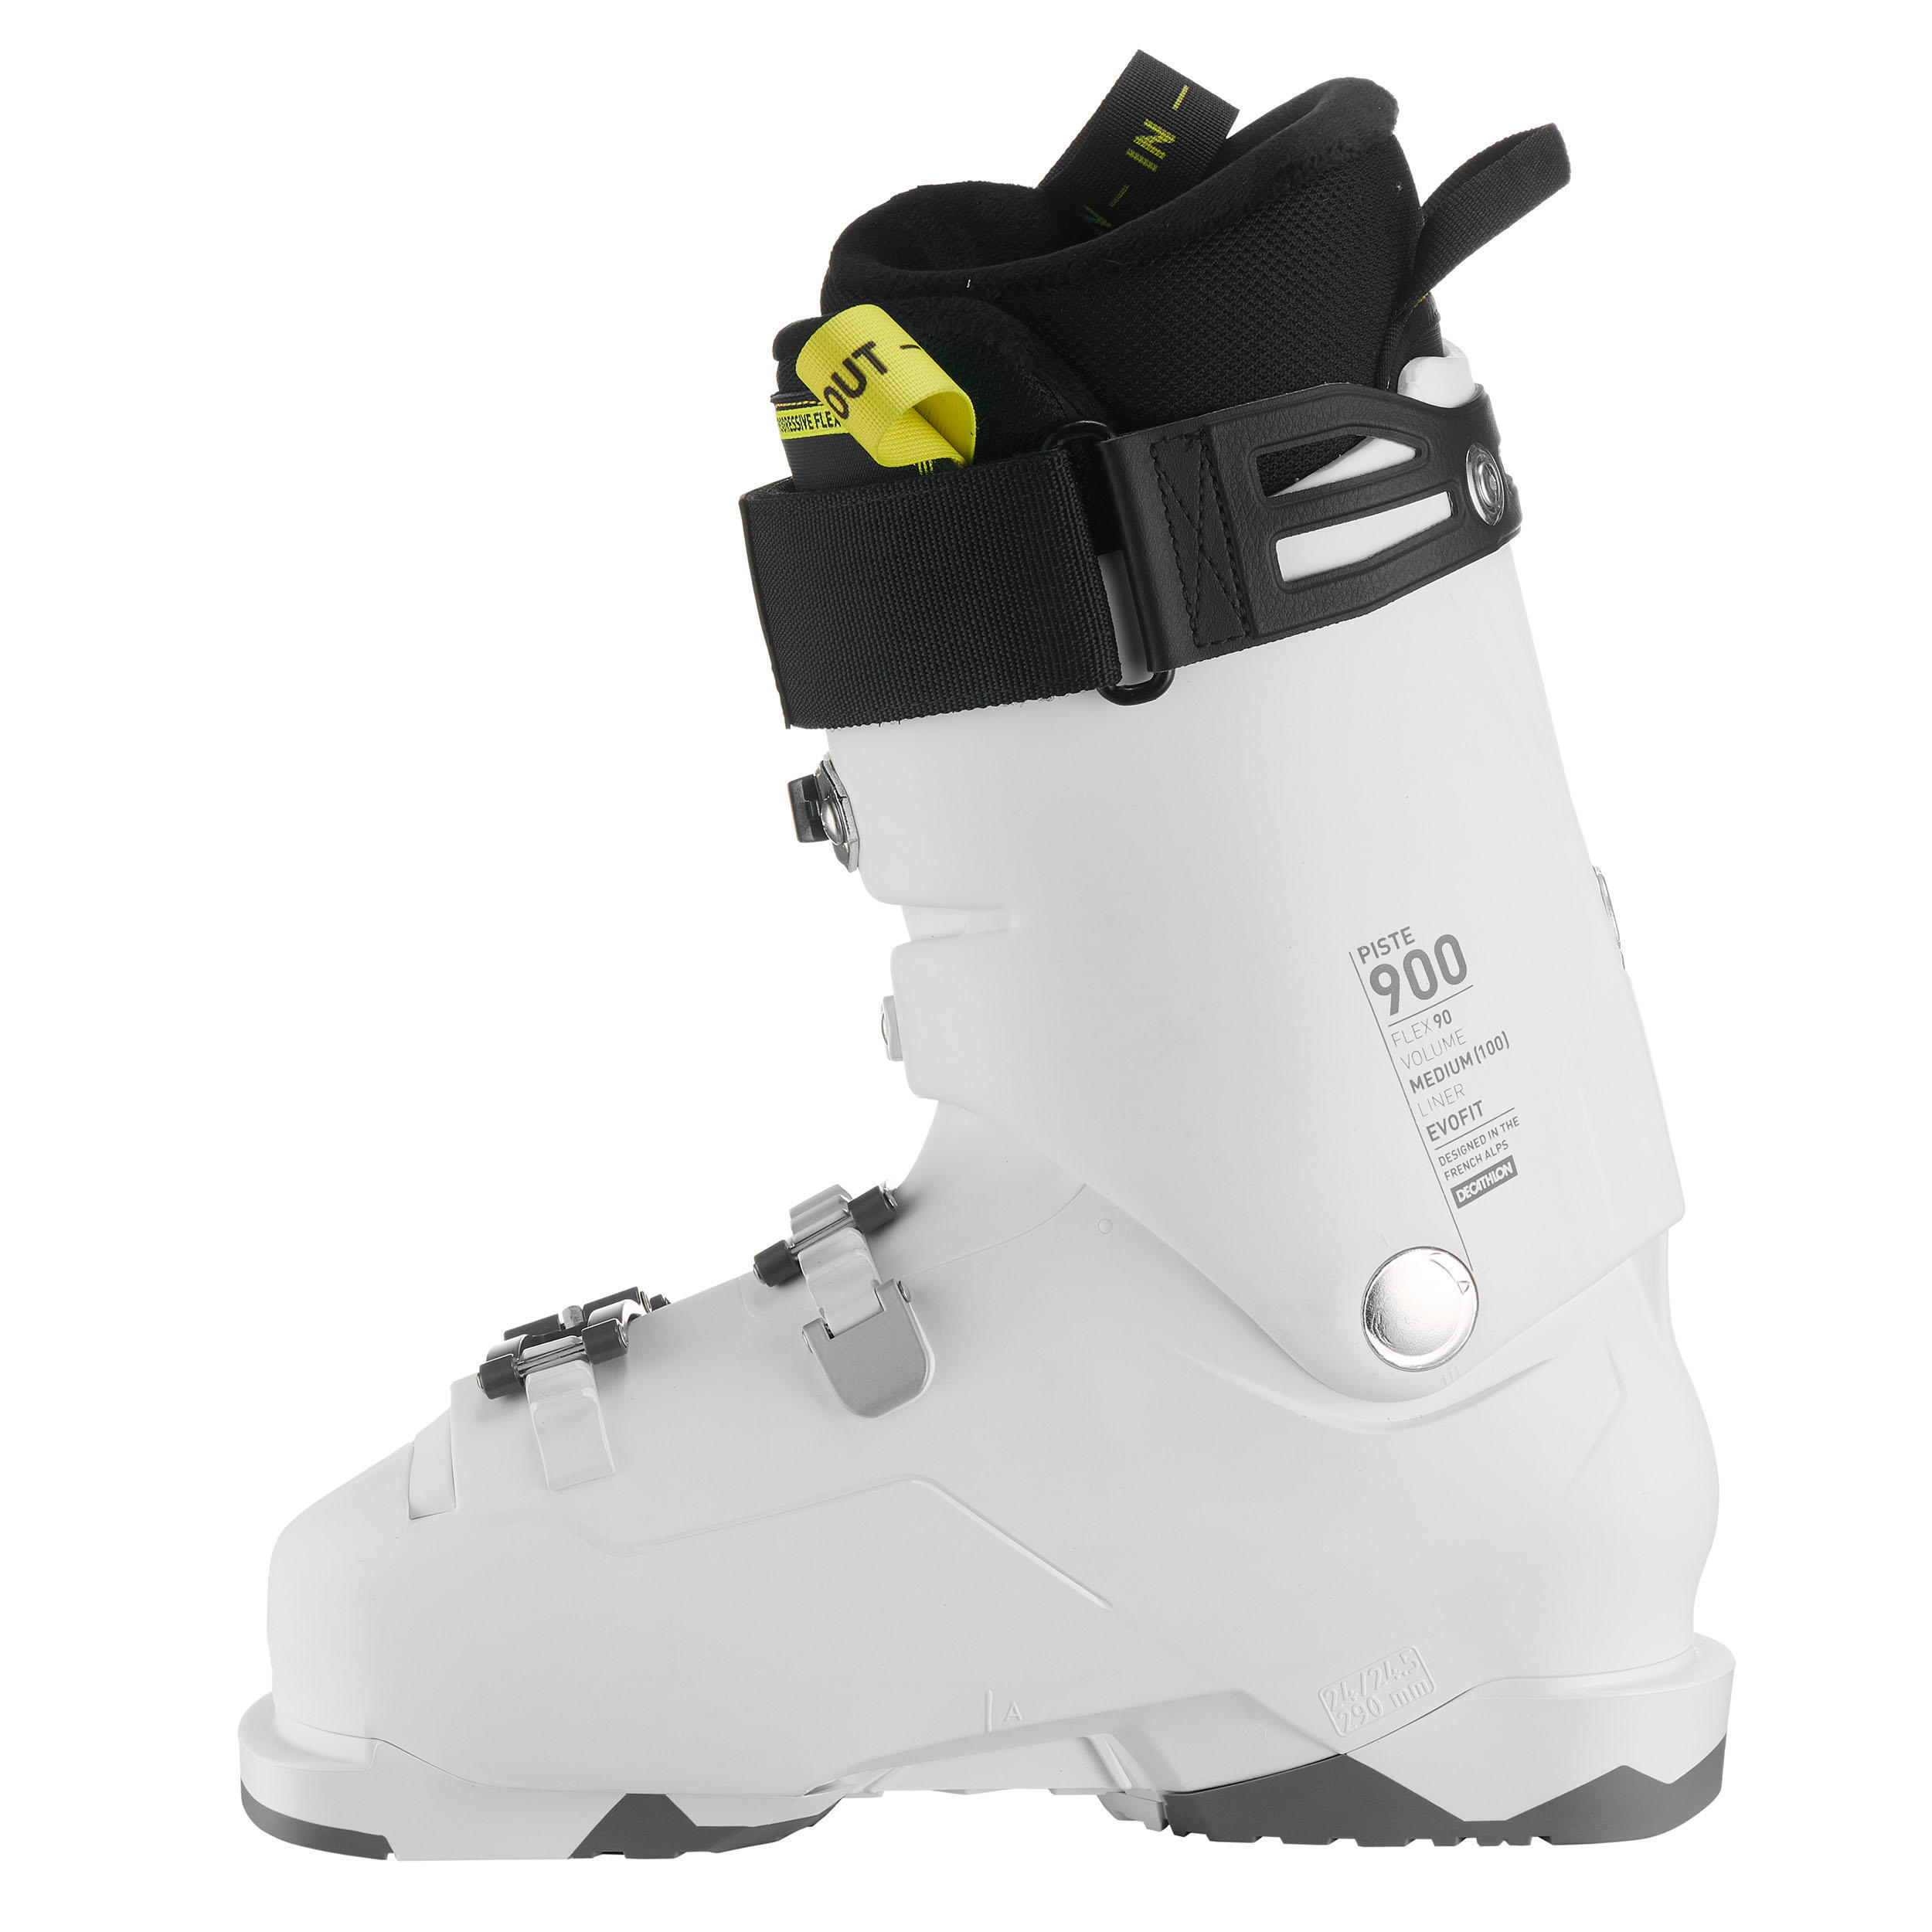 Refurbished Downhill Ski Boots FIT 900 White - B Grade 5/7